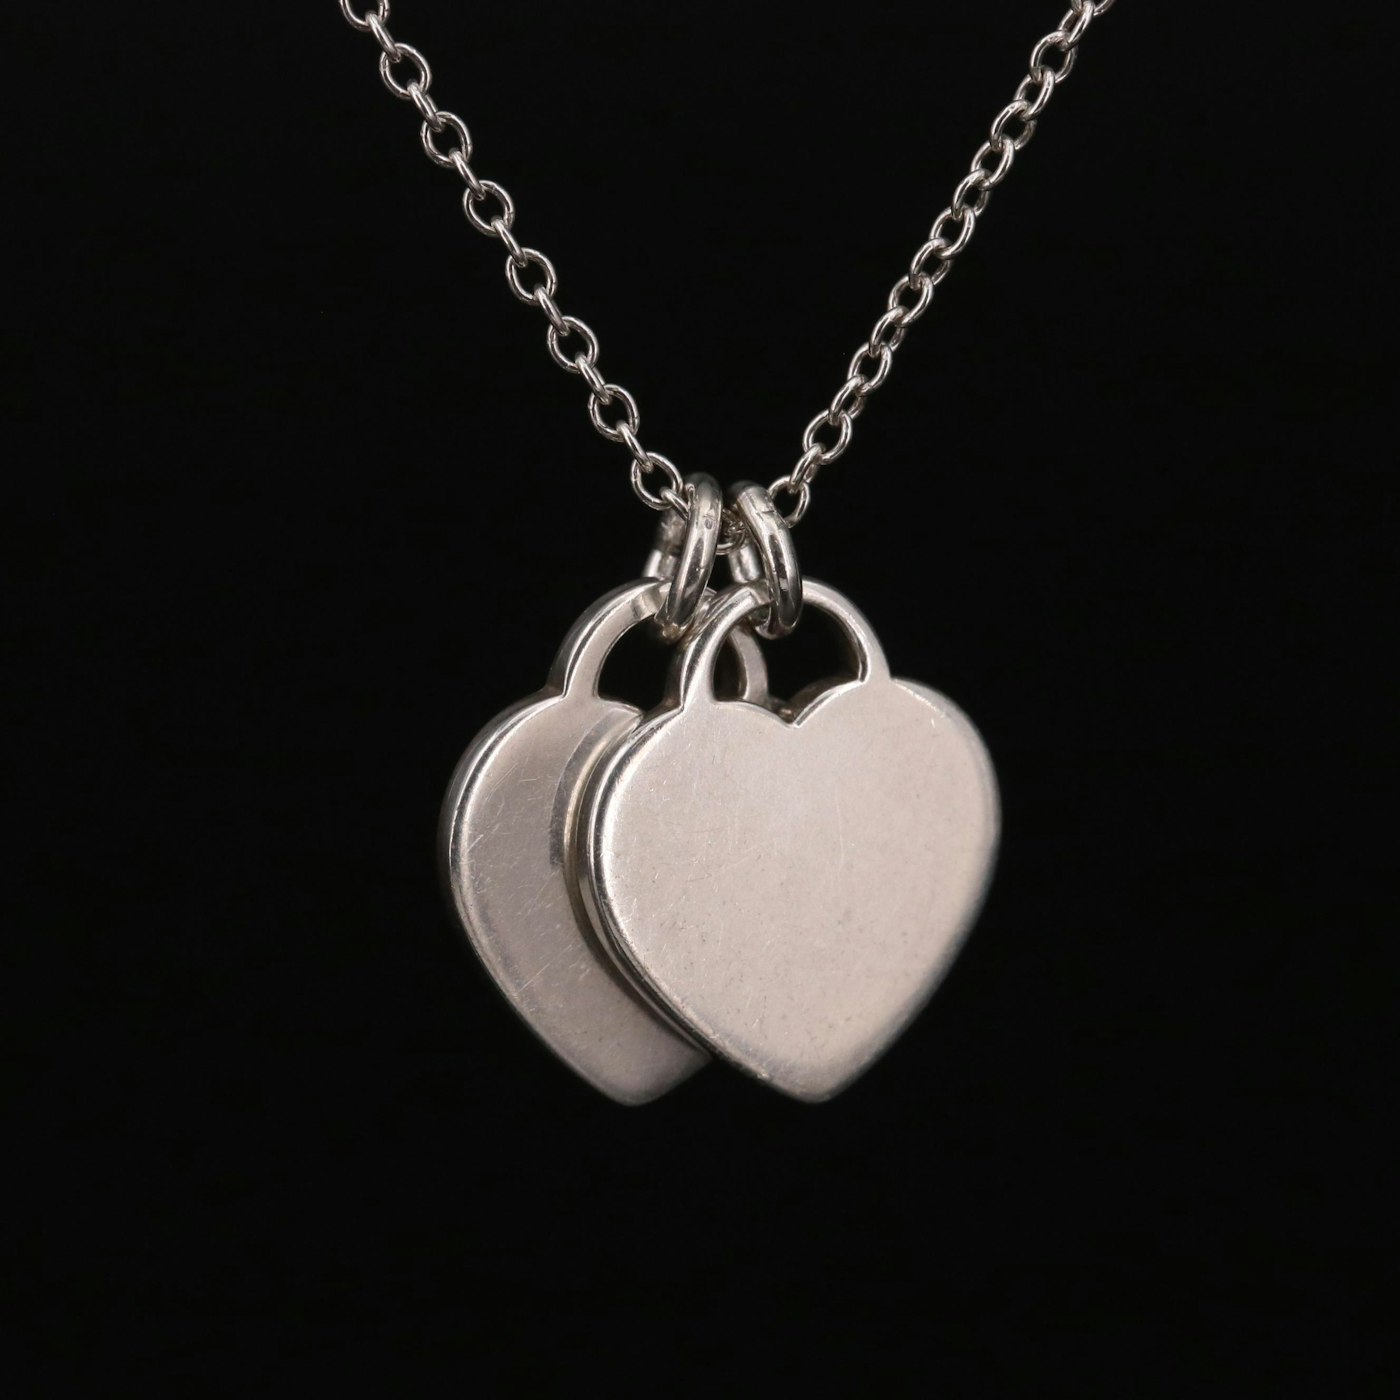 Tiffany silver heart necklace